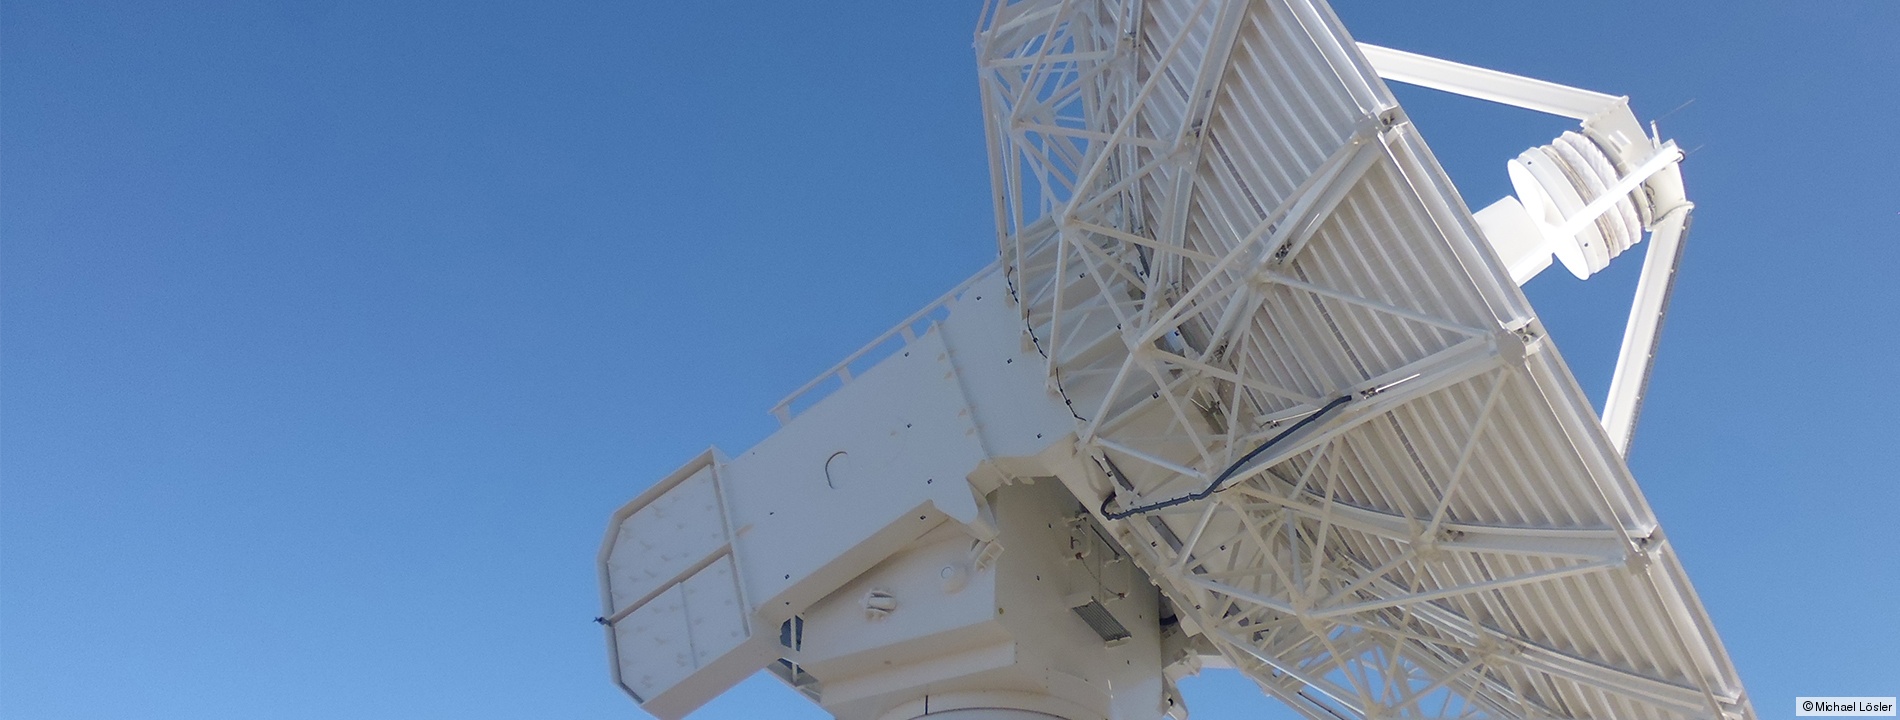 Hauptreflektor eines VGOS-spezifizierten VLBI-Radioteleskops